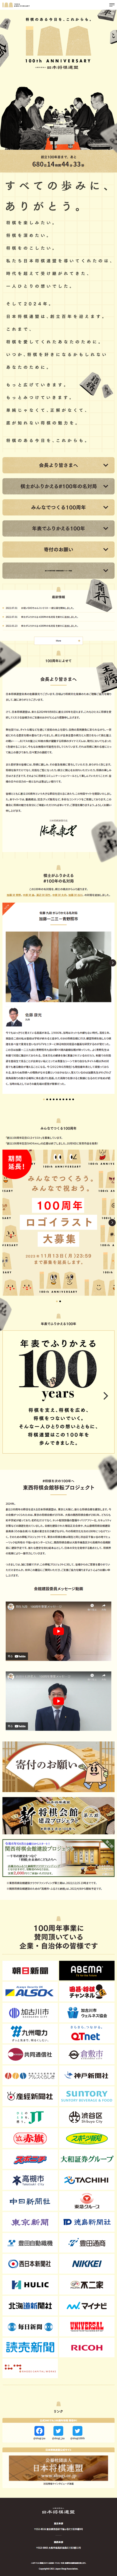 日本将棋連盟100周年記念サイト_sp_1